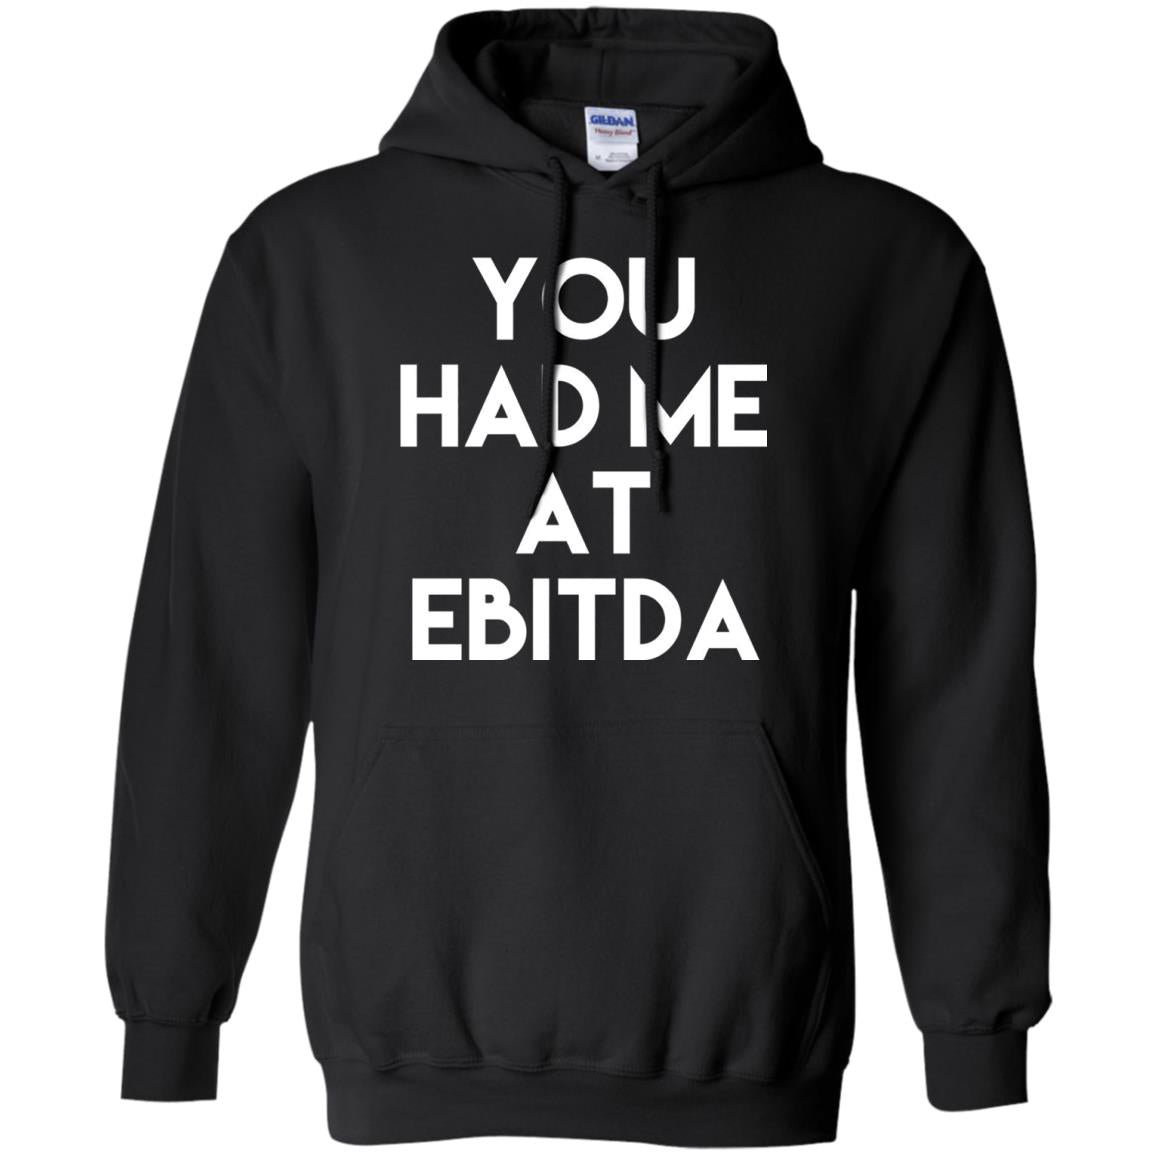 Accounting Cpa T-shirt You Had Me At Ebitda